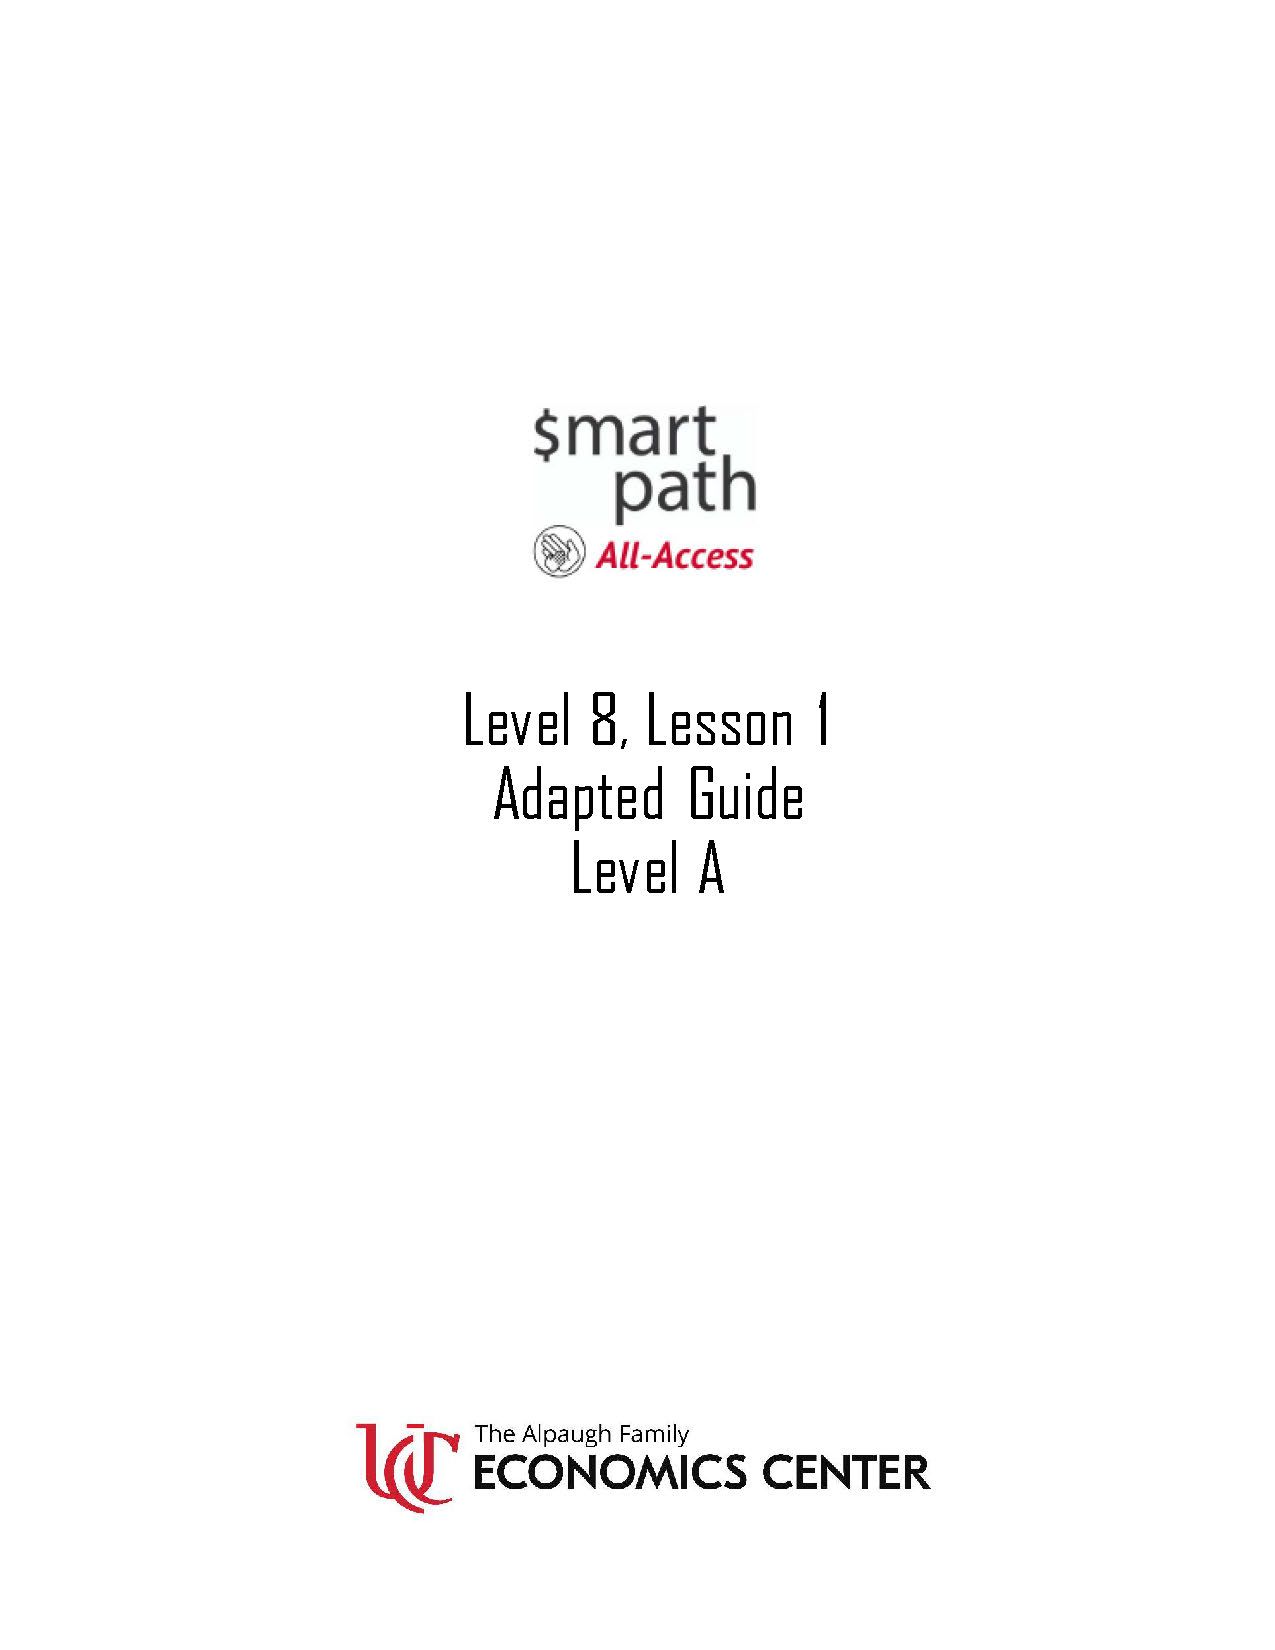 Level 8 Lesson 1 cover